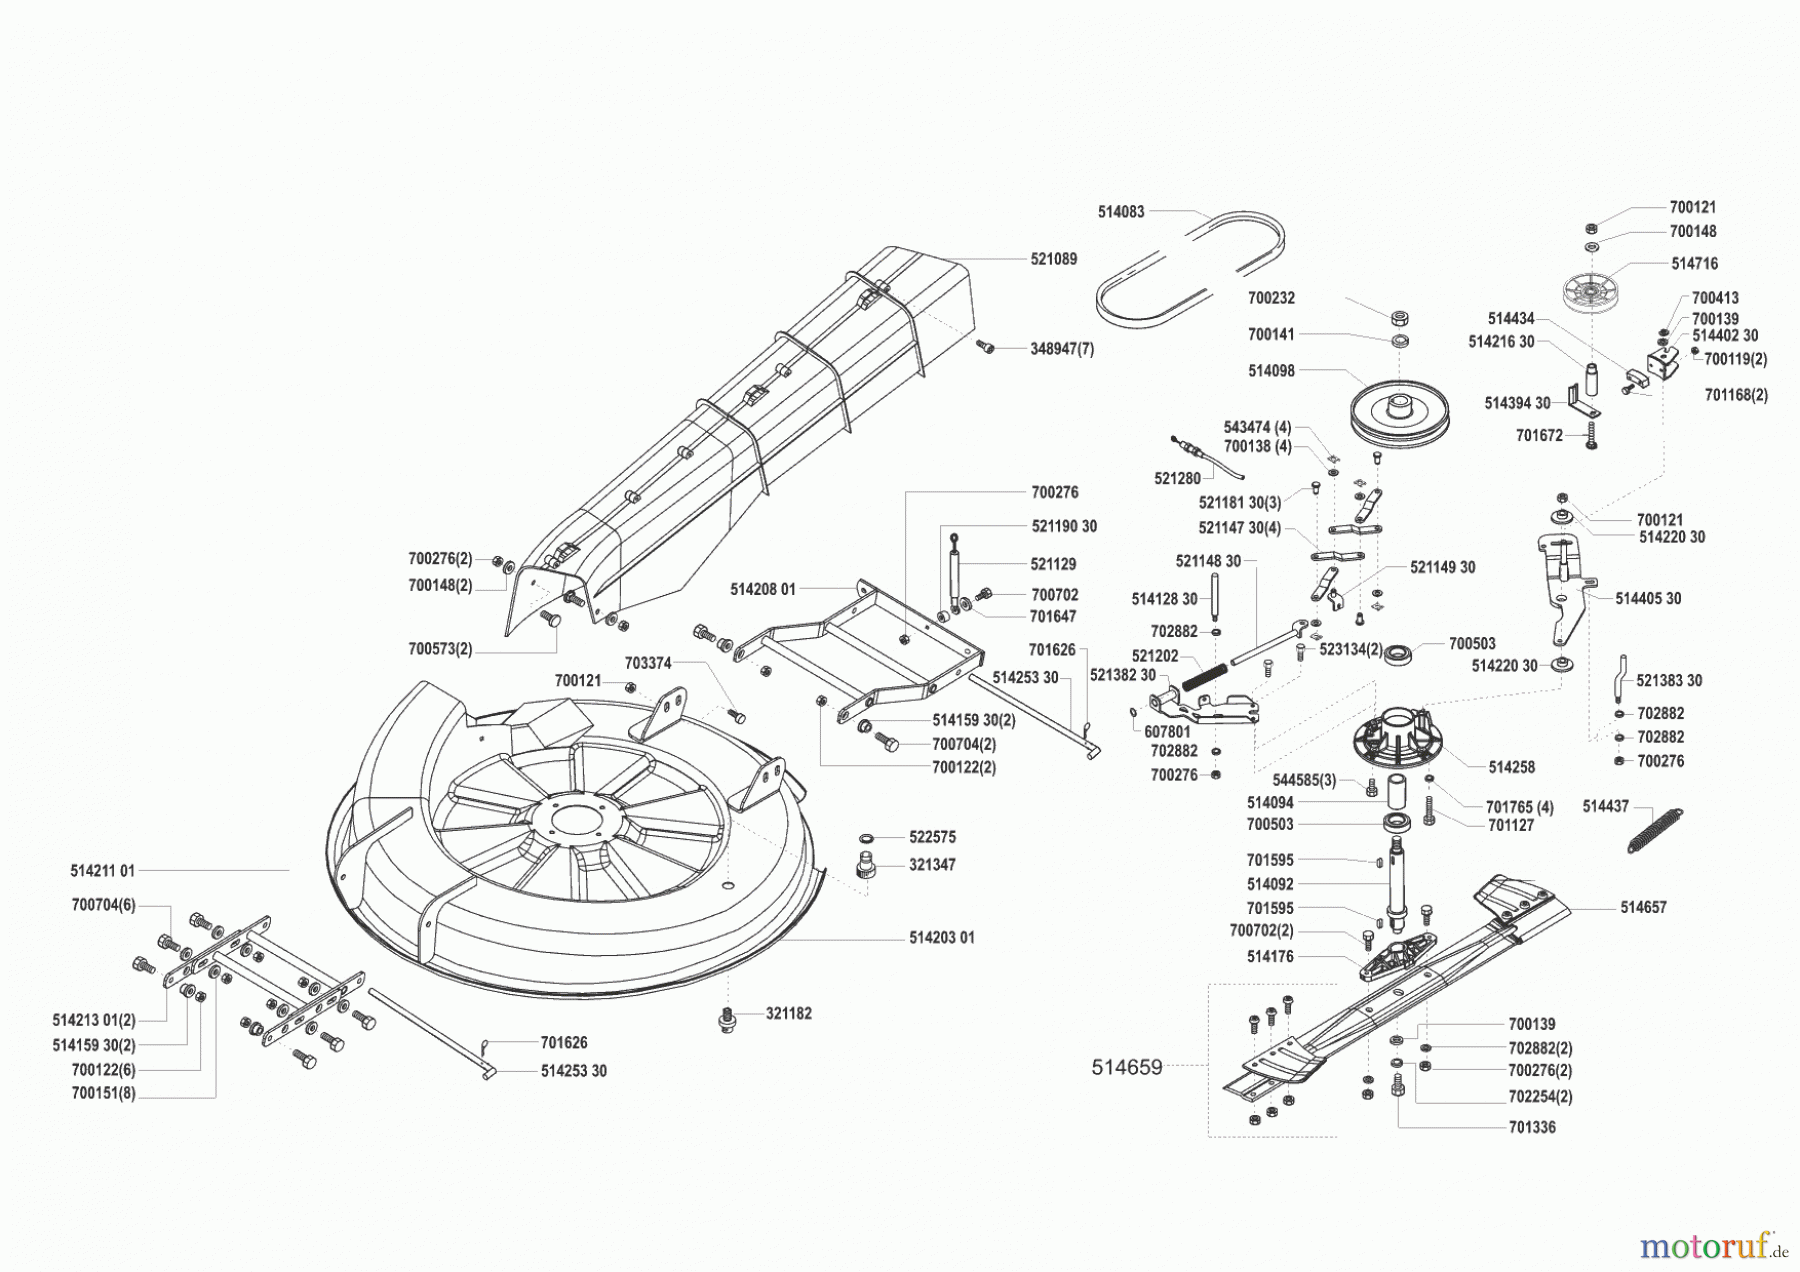  AL-KO Gartentechnik Rasentraktor T 10 vor 01/2001 Seite 5